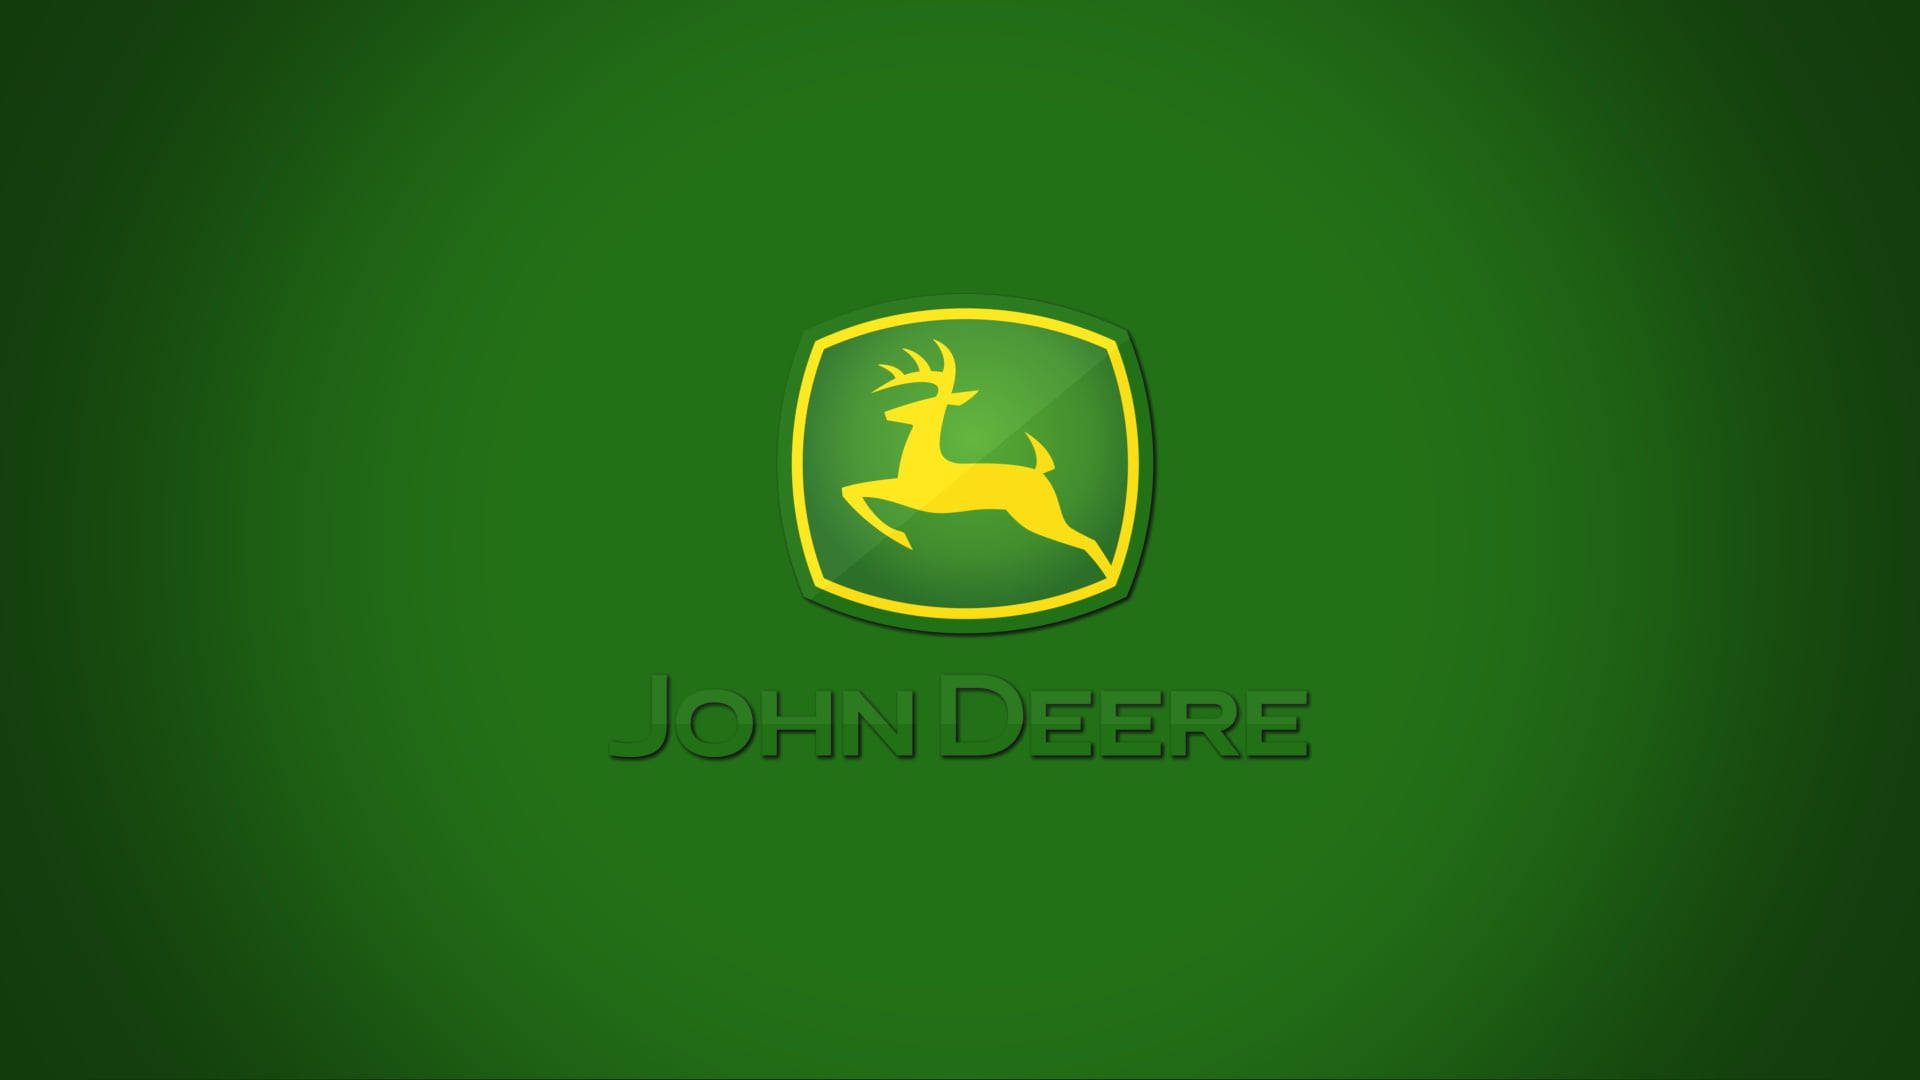 john deere logo hd wallpaper